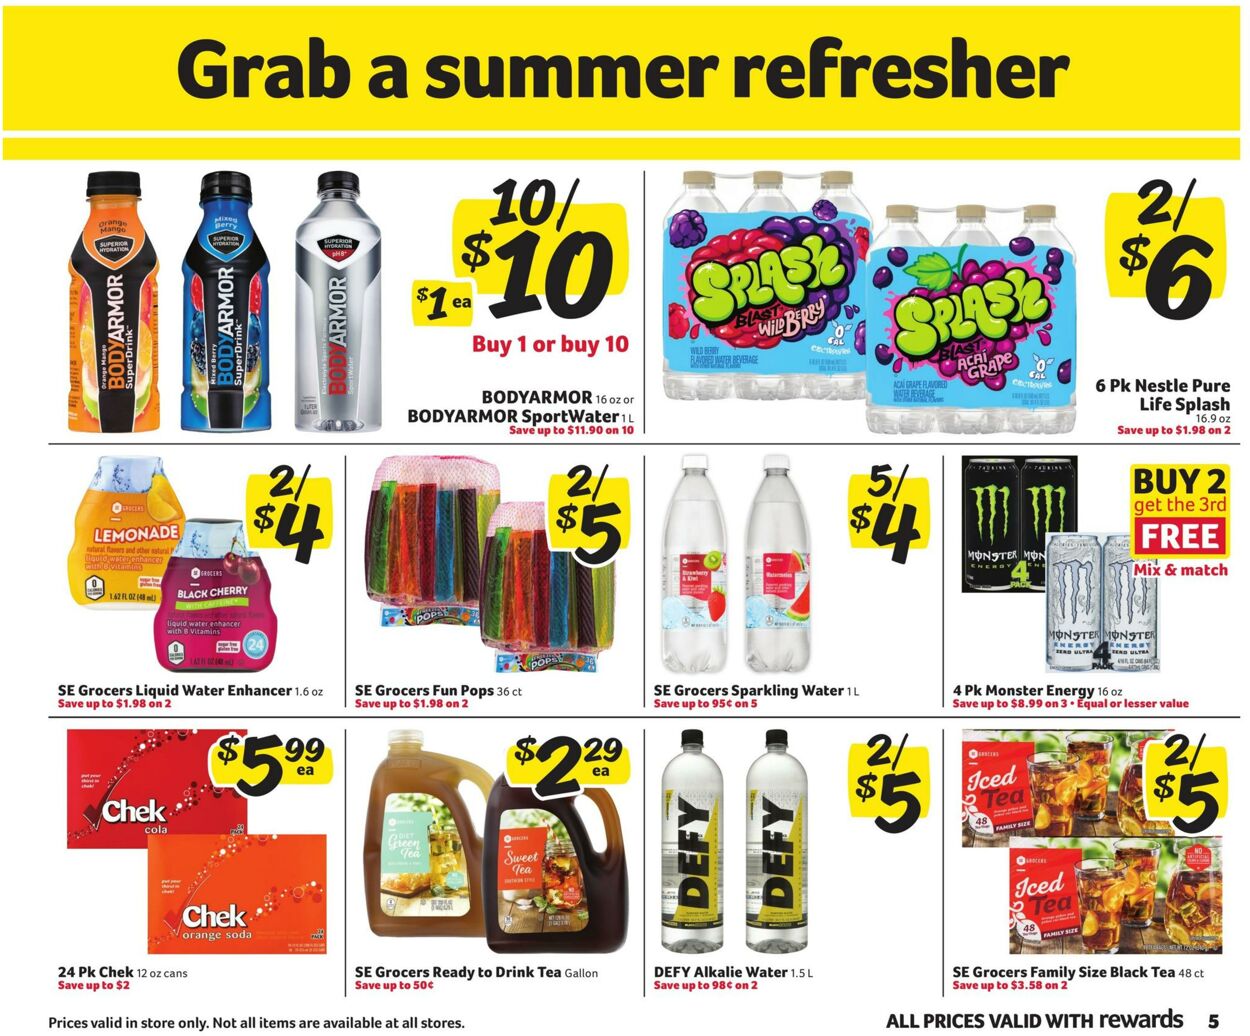 Weekly ad Harvey's Supermarkets 06/29/2022 - 07/12/2022